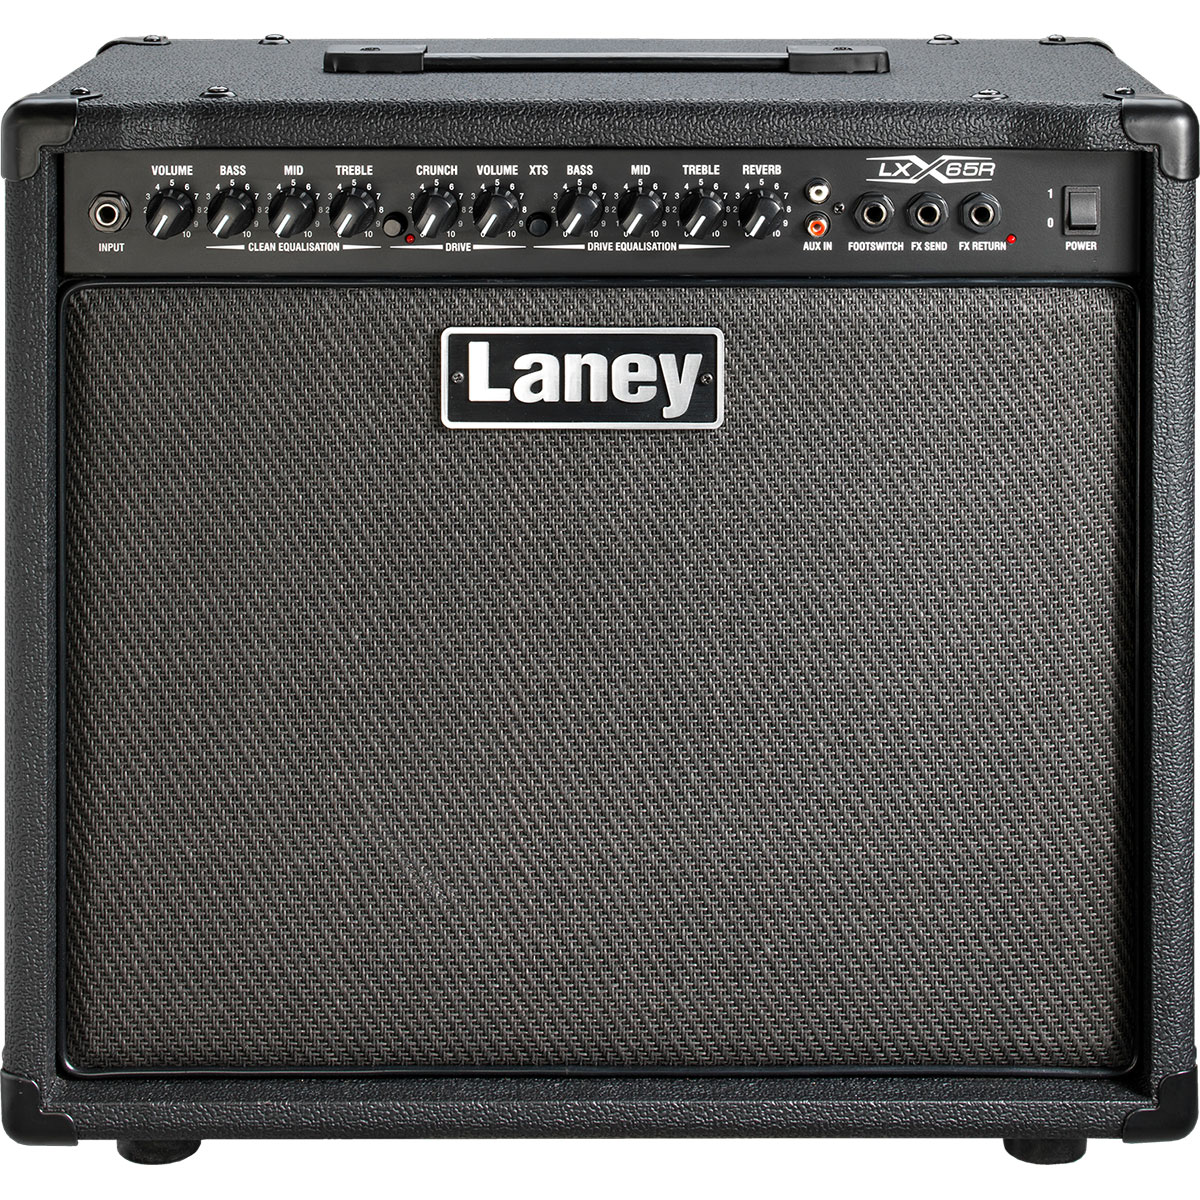 Laney LX65R 65W 1x12 Guitar Combo Amp Black<br>LX65R